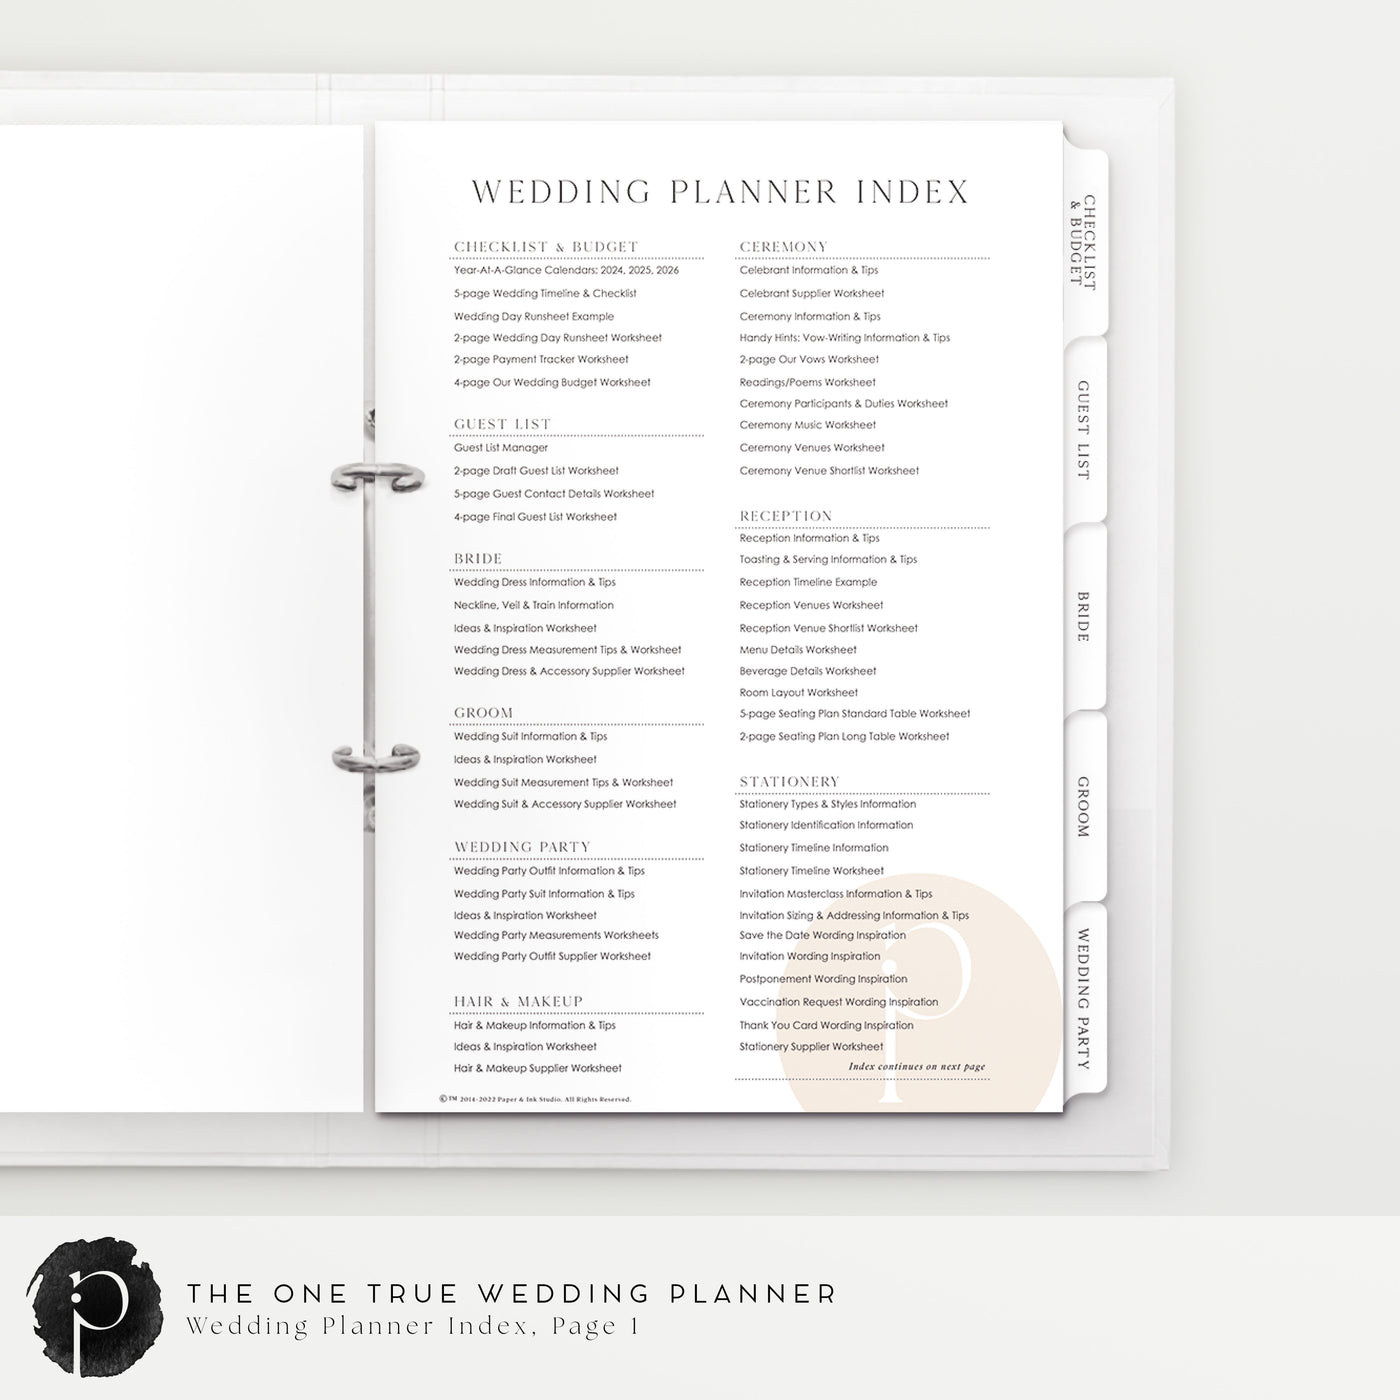 Personalised Wedding Planner & Organiser - Ultimate Guide w Checklists - Adventure